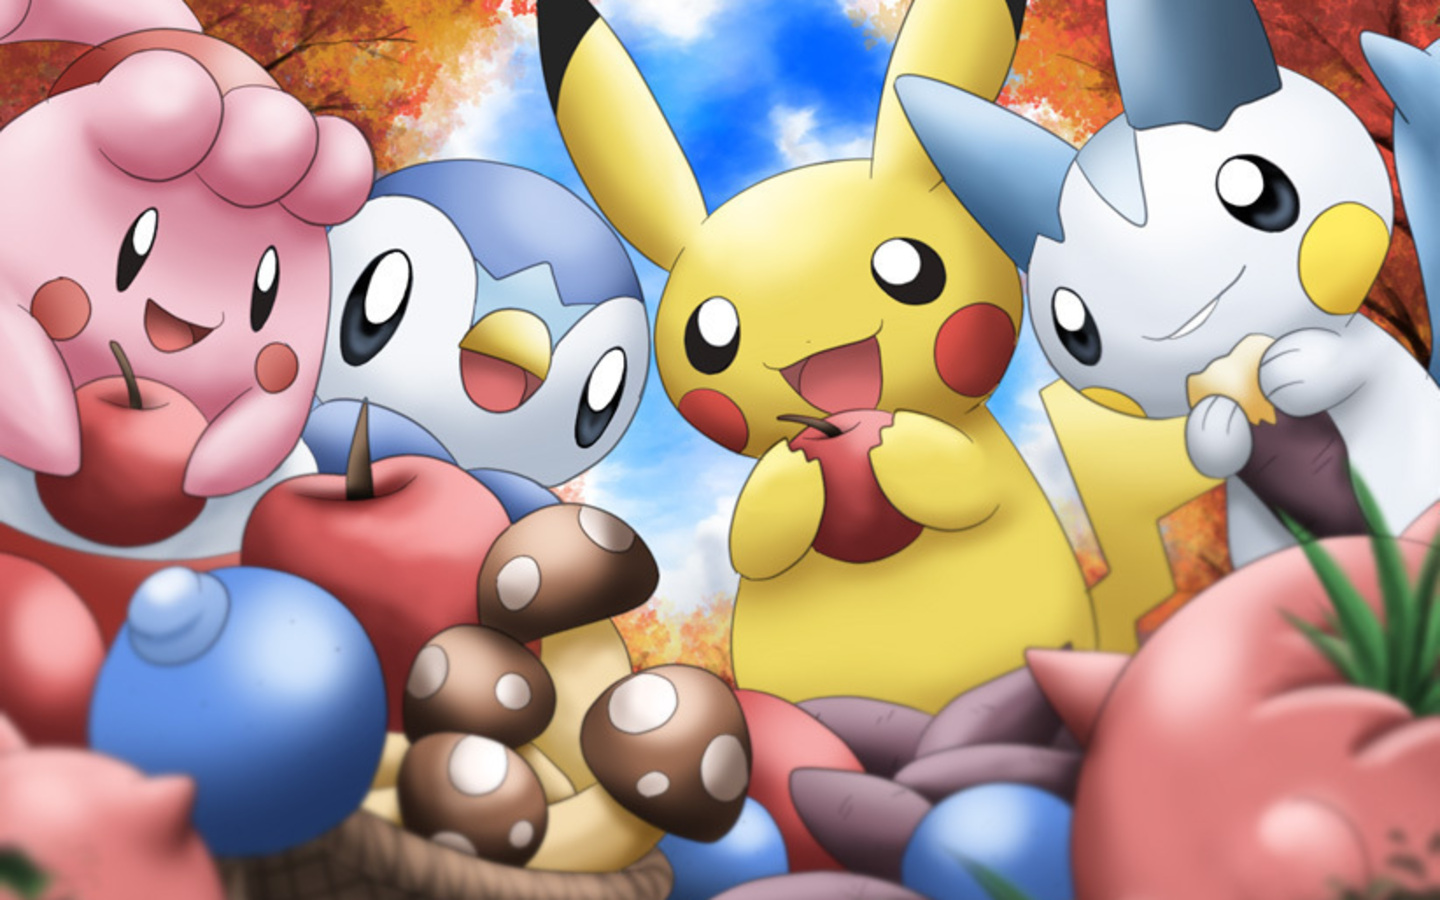 Download Cute Pokemon Free Wallpaper 1440x900 Full HD Wallpapers